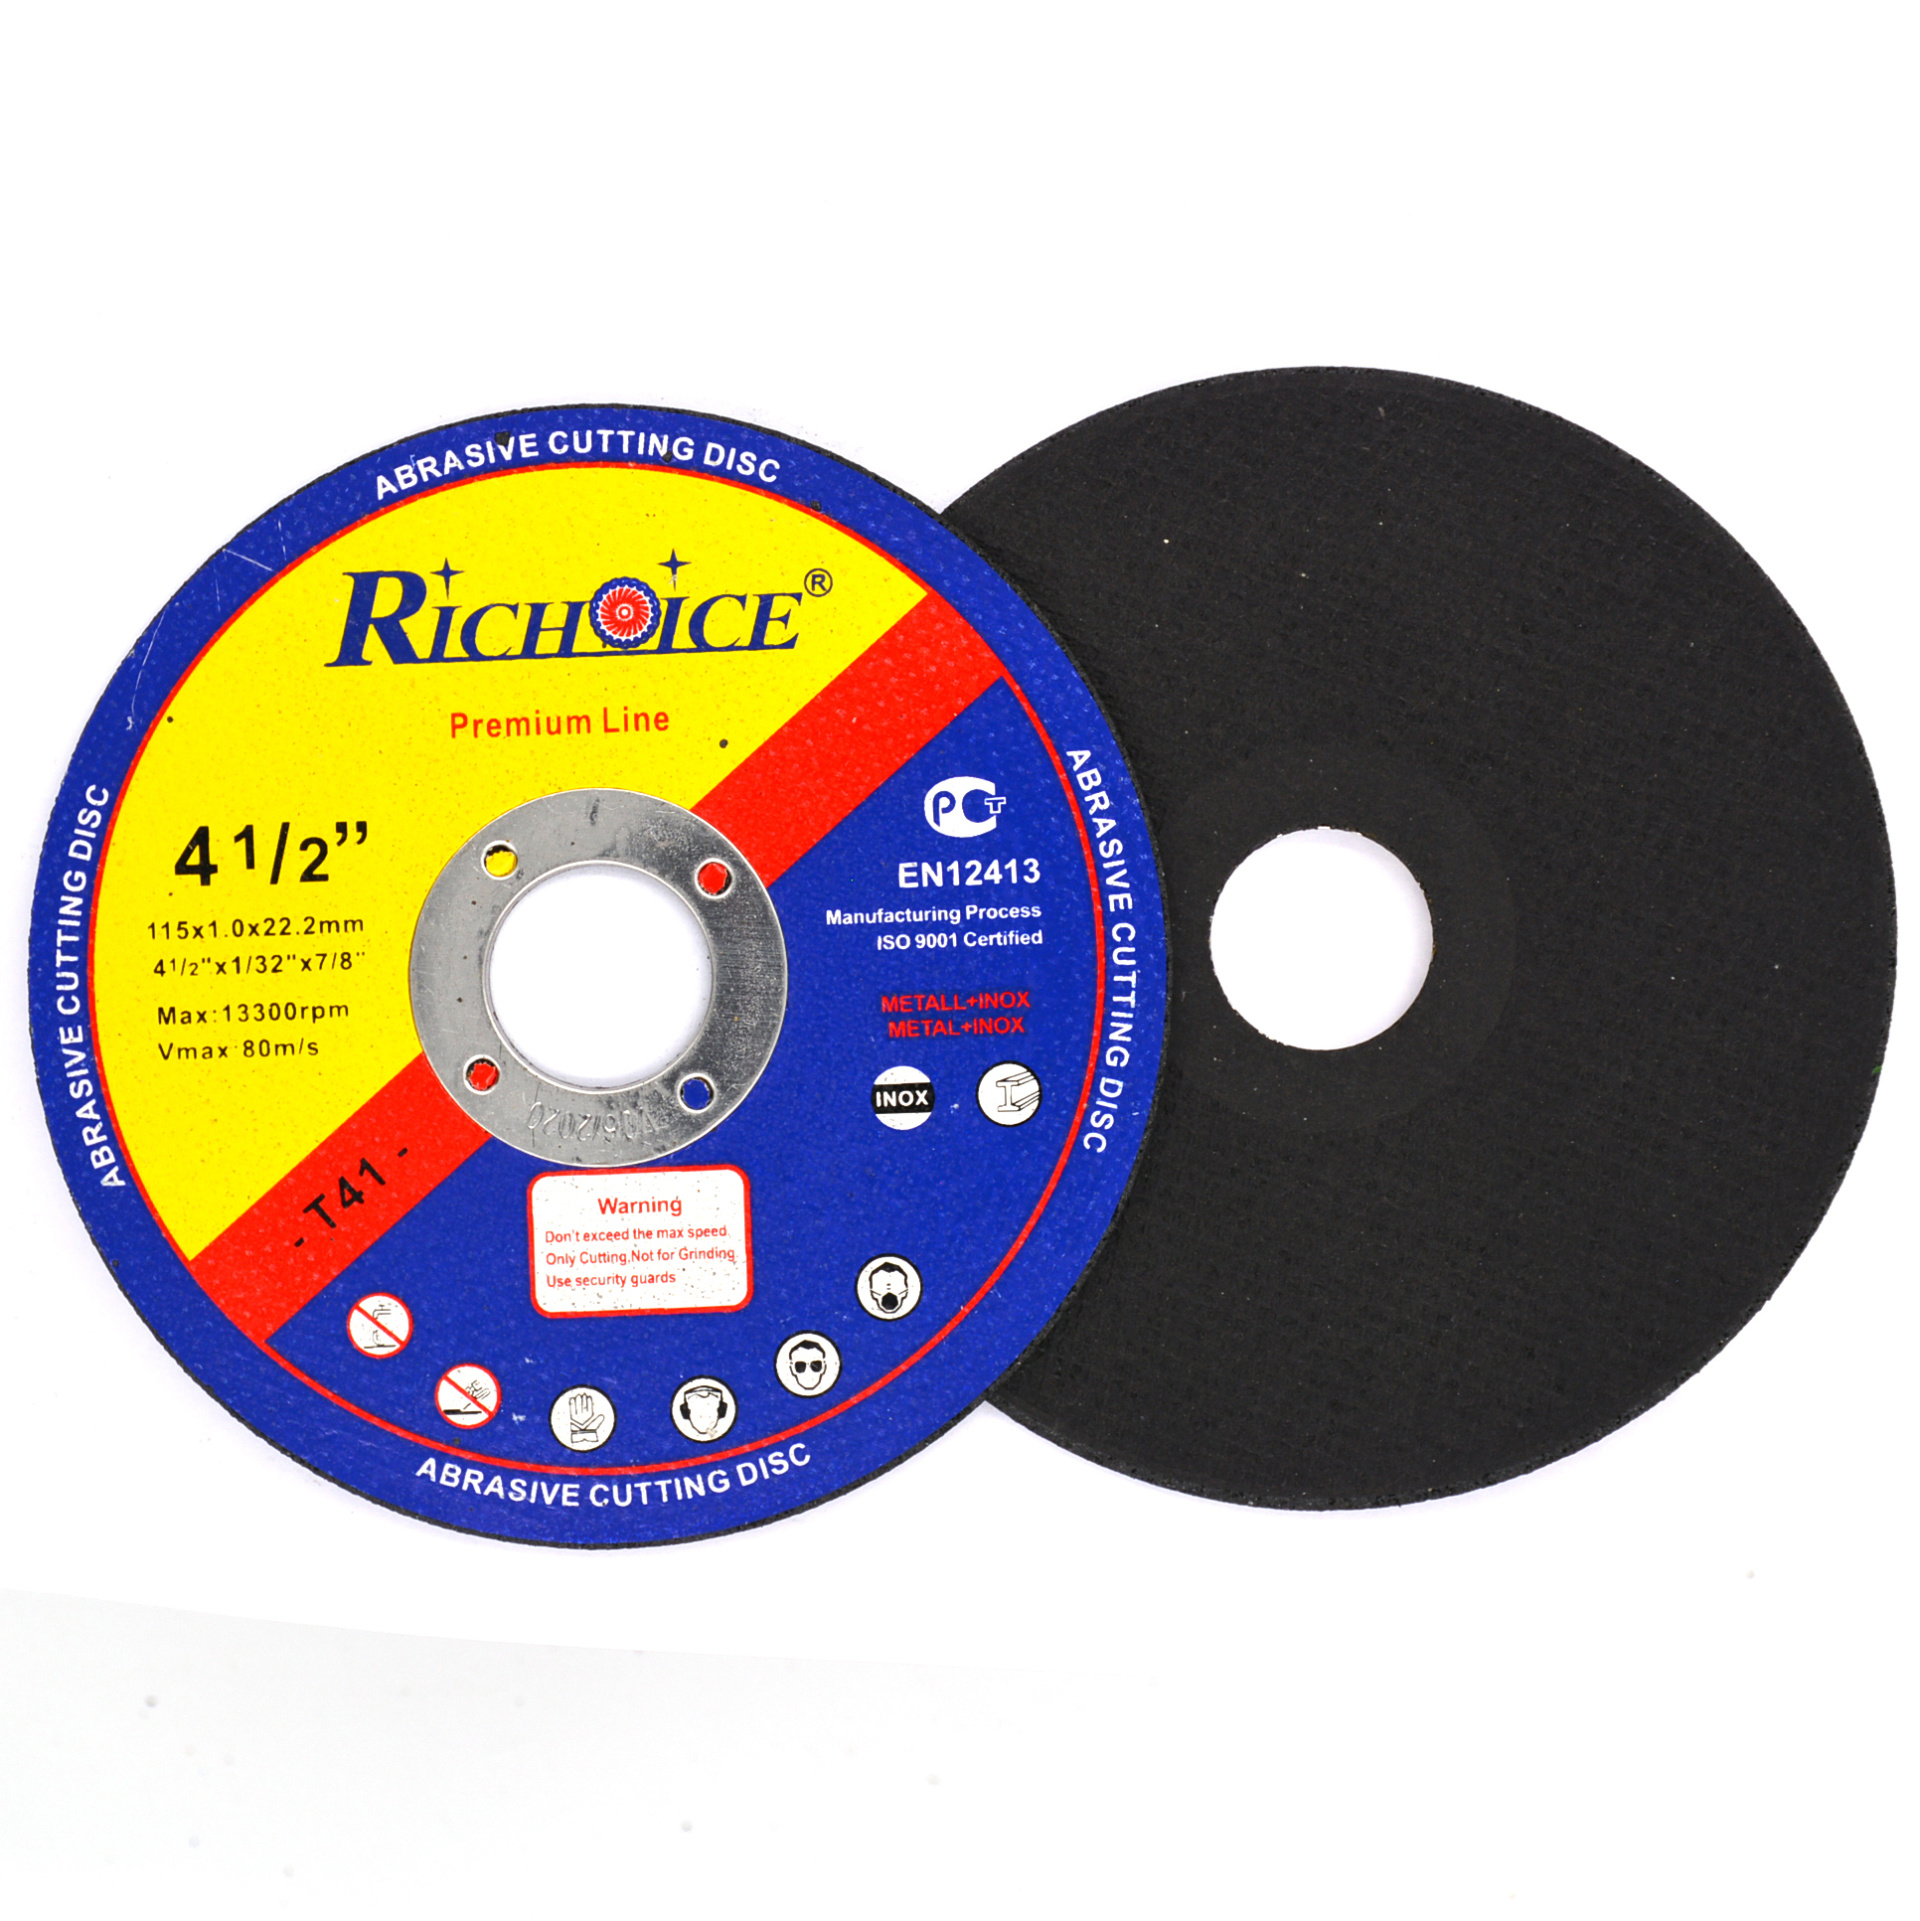 Abrasive cutting disc for Metal & Inox Cast Iron Cutting Disc